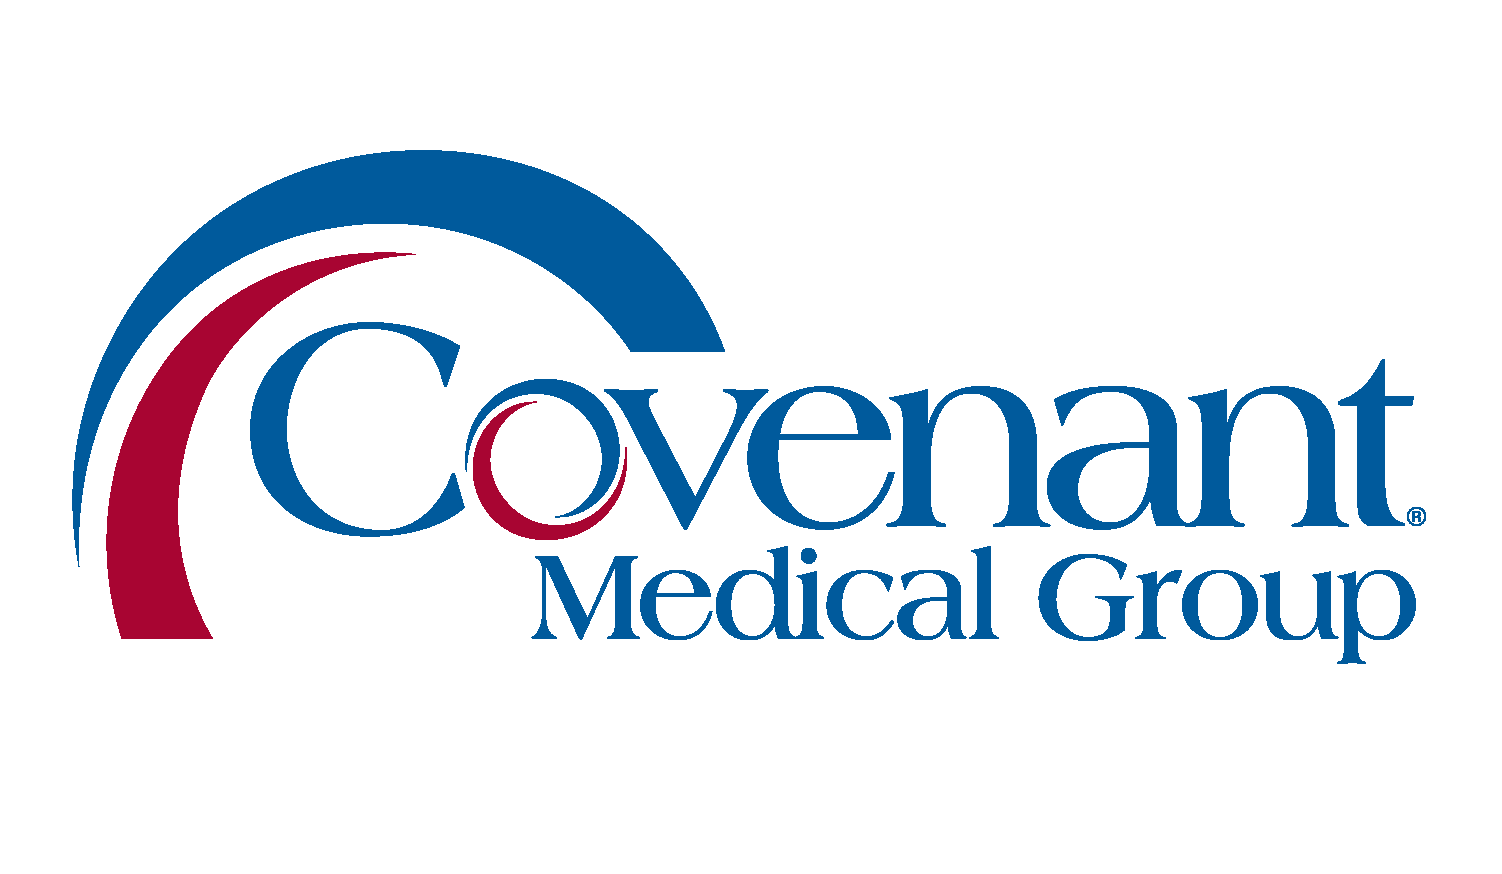 Covenant Medical Group logo